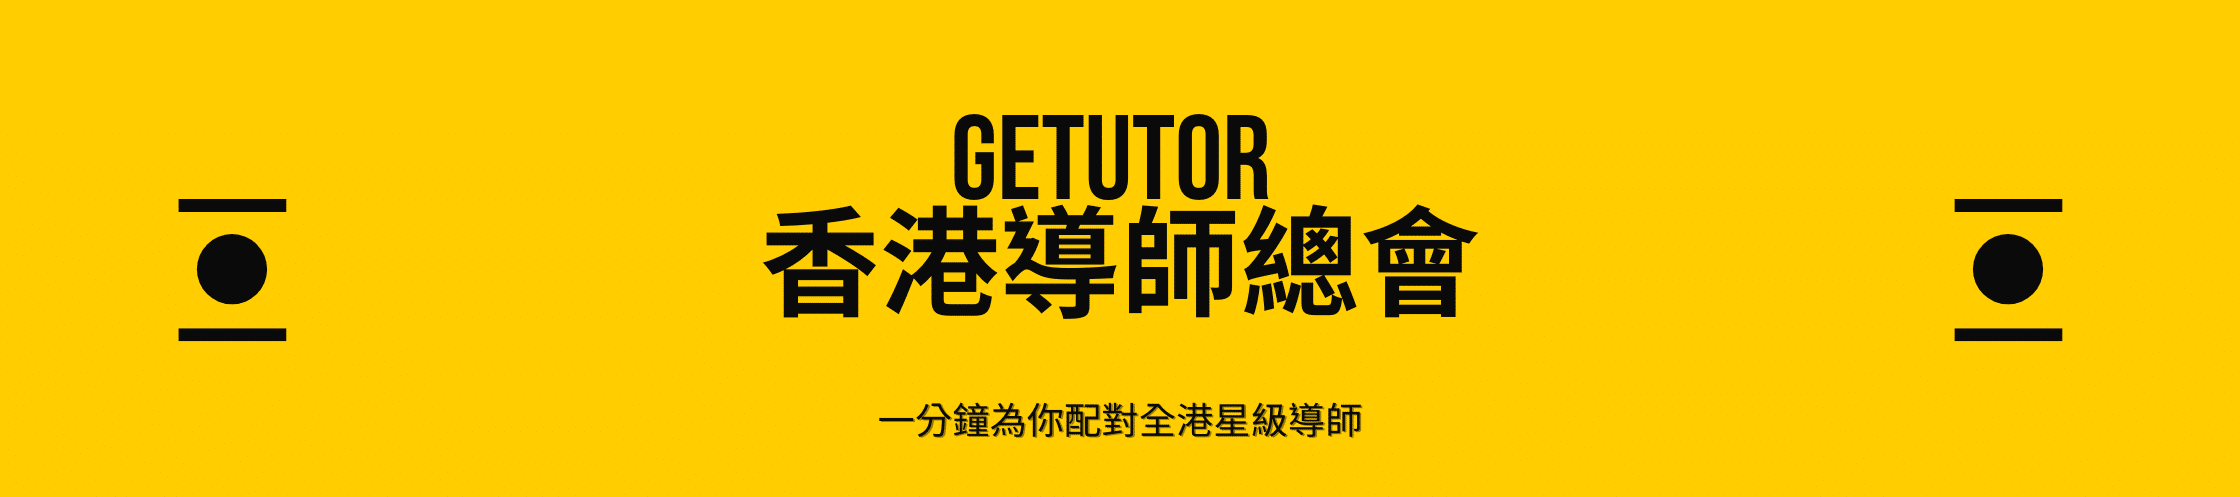 GETUTOR-香港導師總會